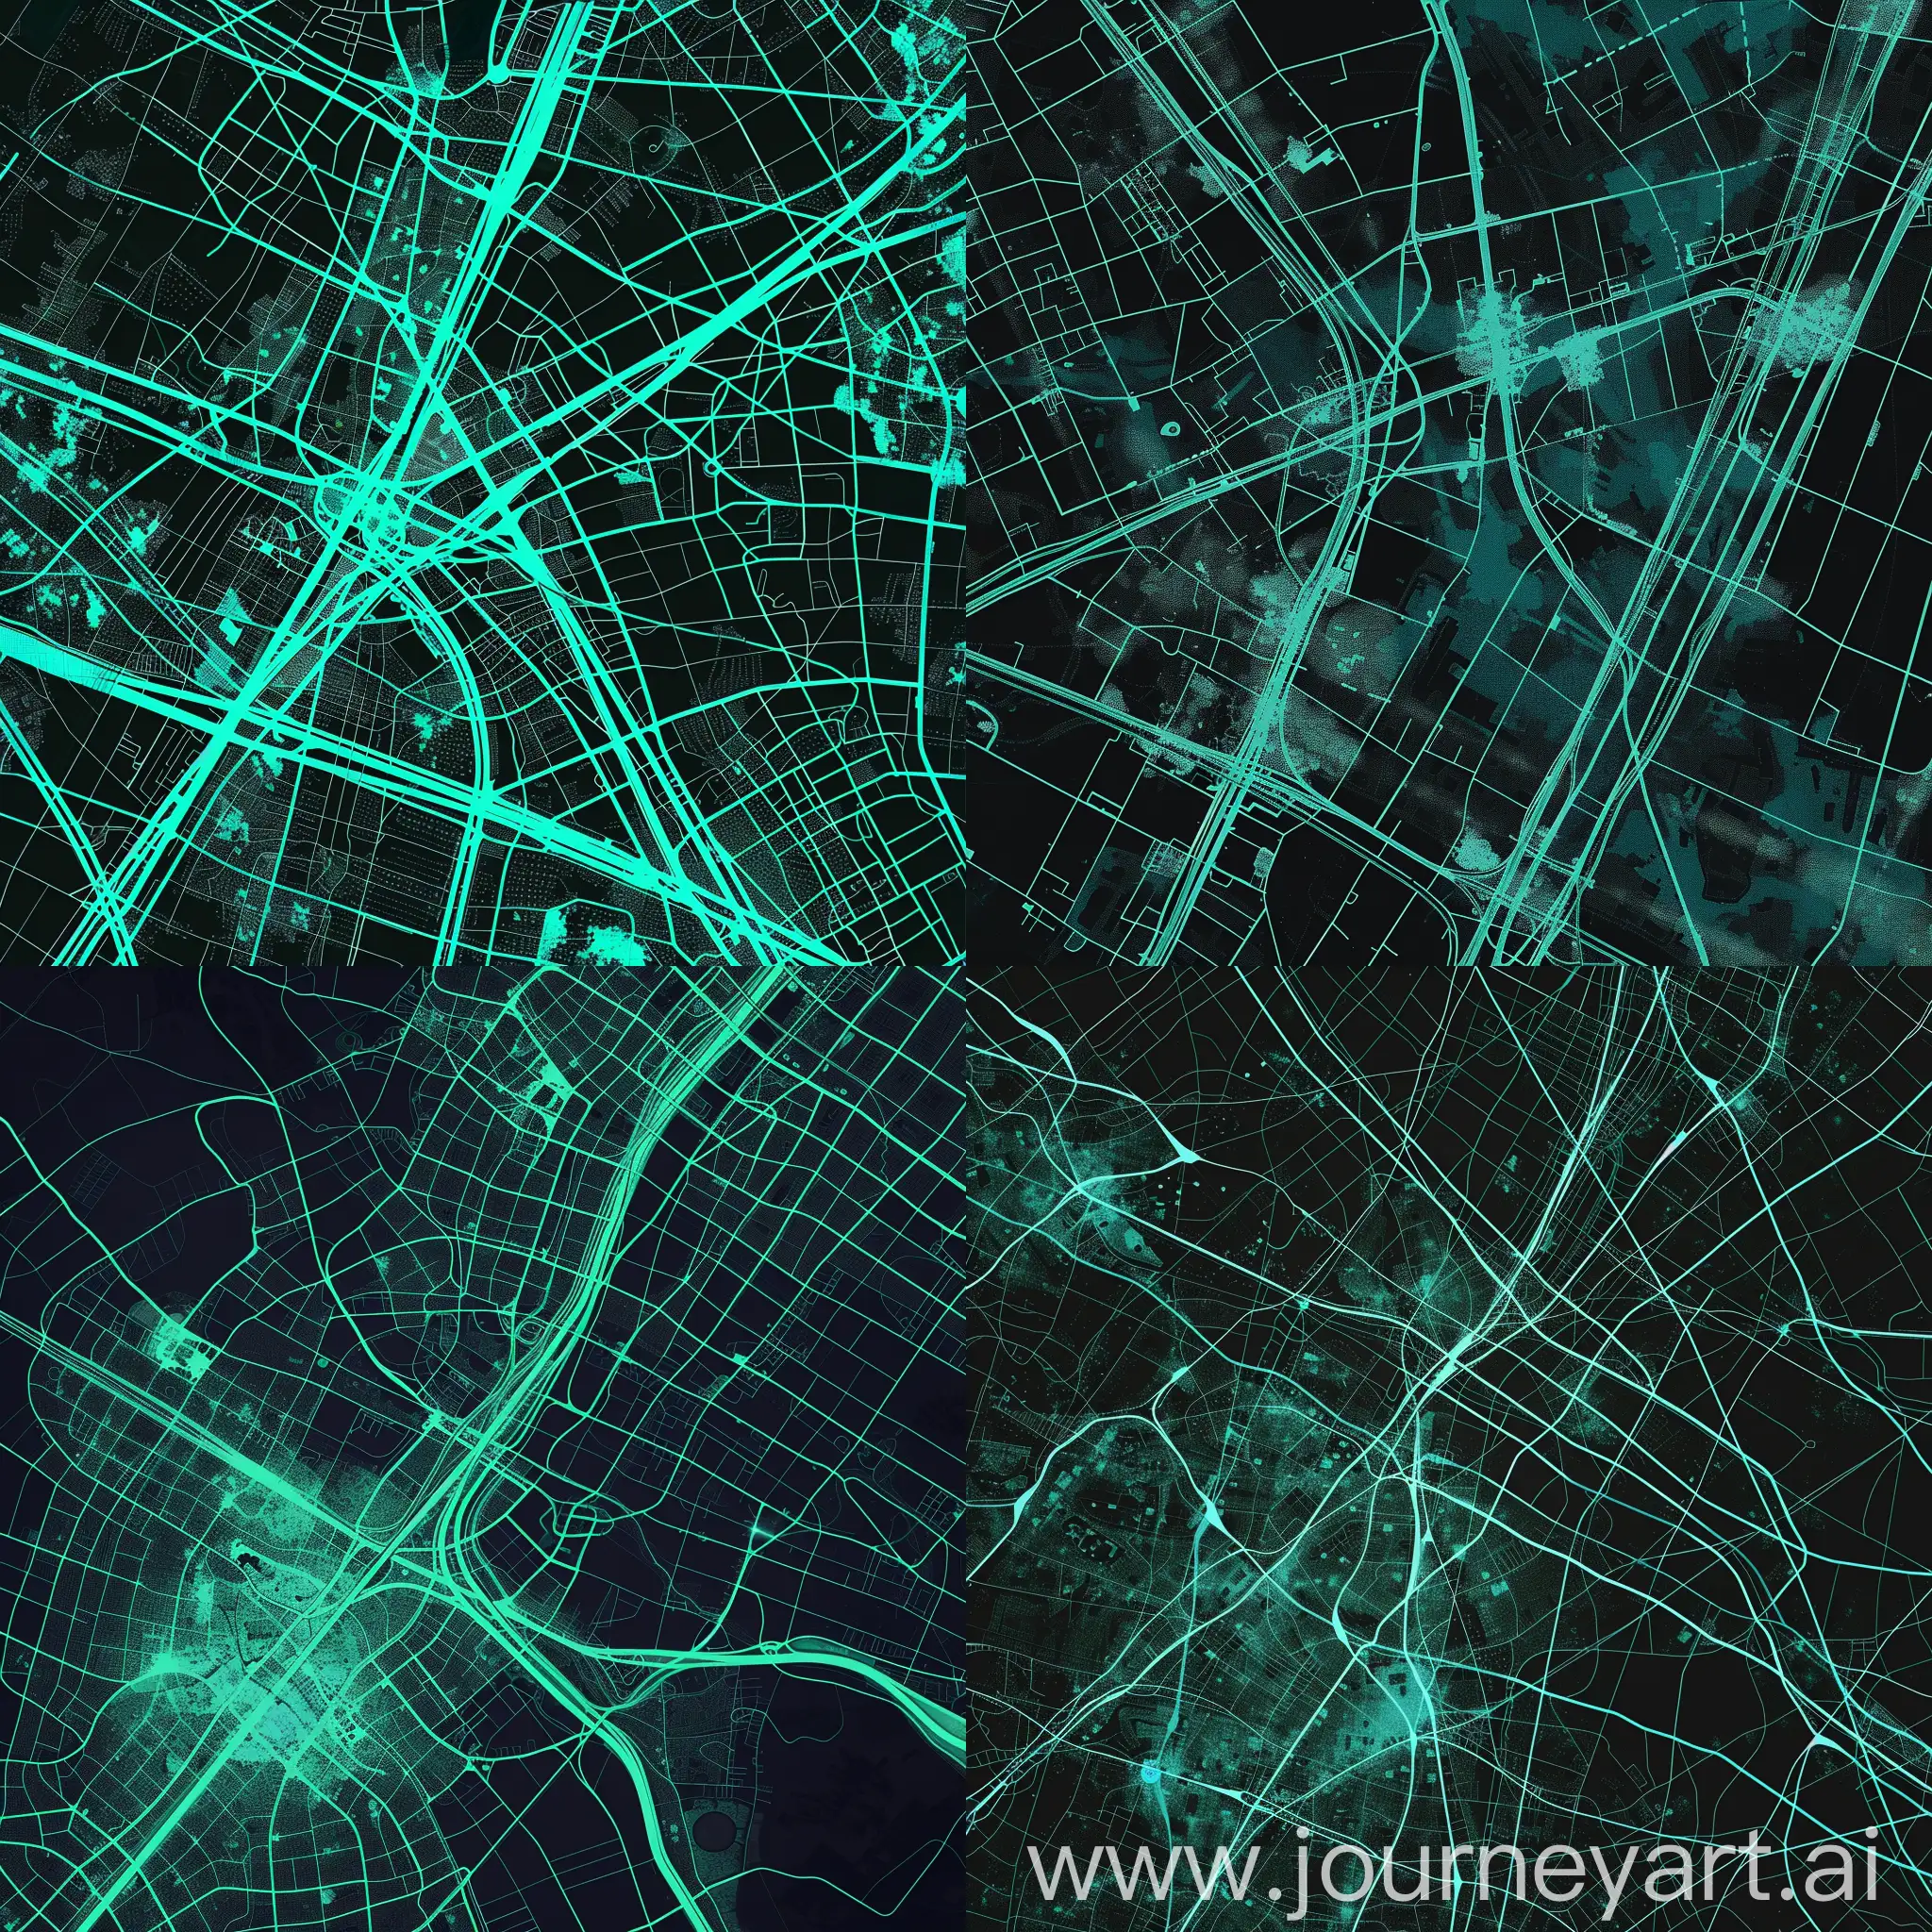 Analyzing-Urban-Traffic-Patterns-Aqua-Green-and-Black-Overlay-on-Road-Network-Data